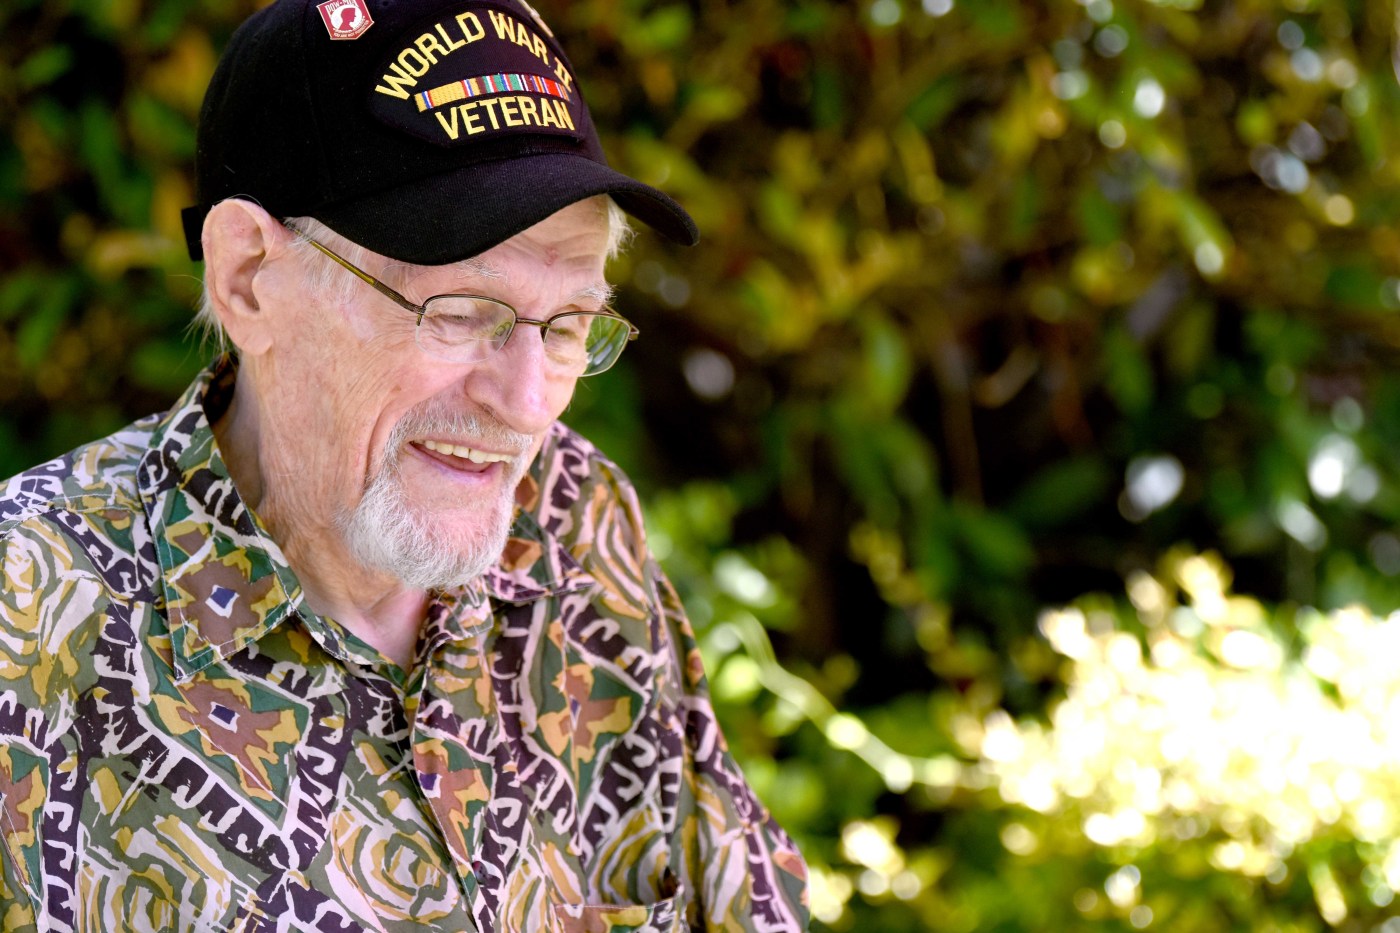 Texas Veteran celebrates 96th birthday with drive-by parade